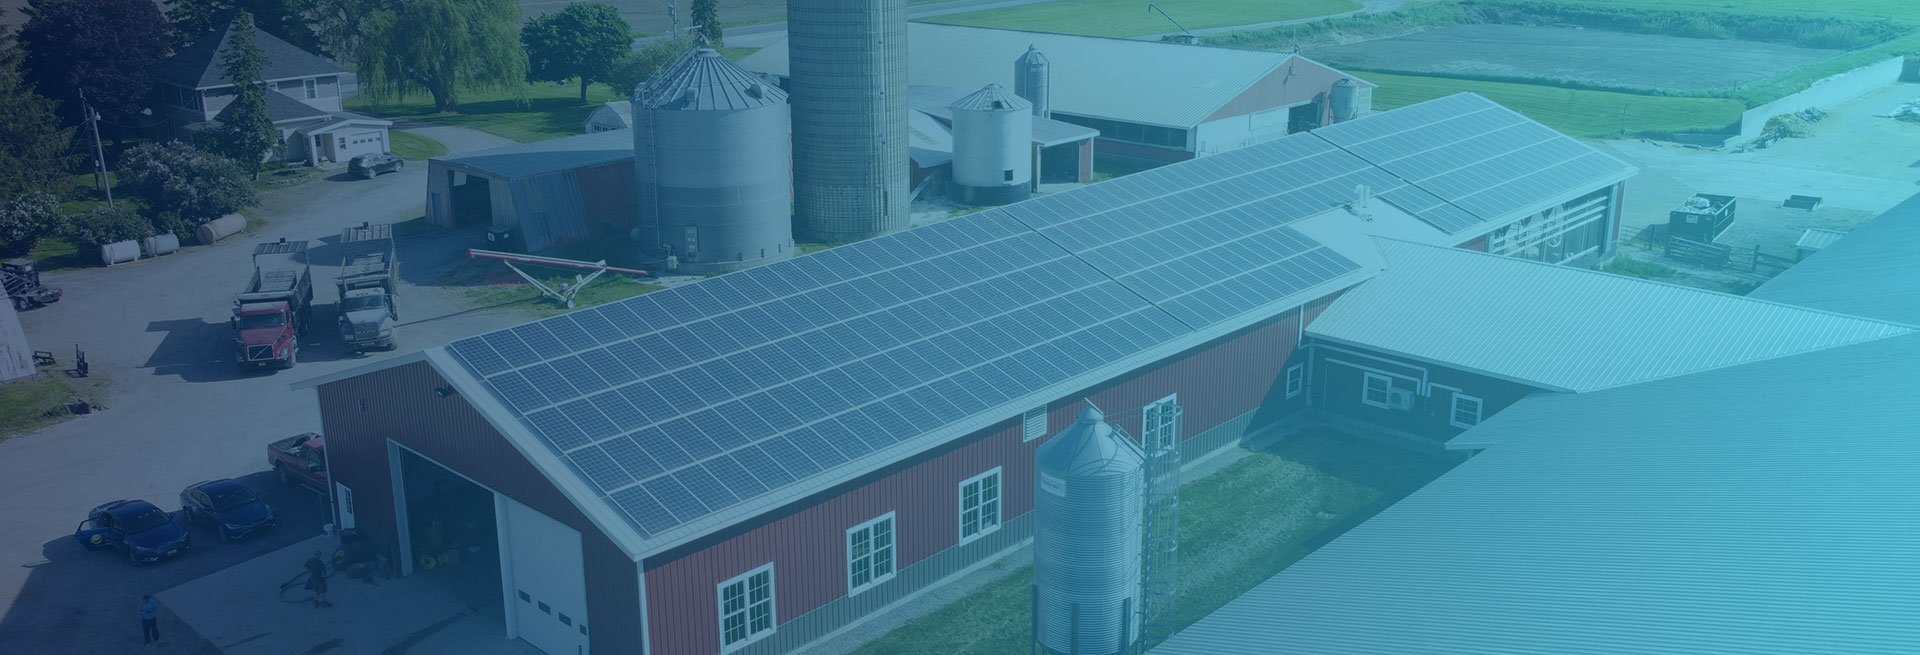 solar-panels-on-barn-ag-header